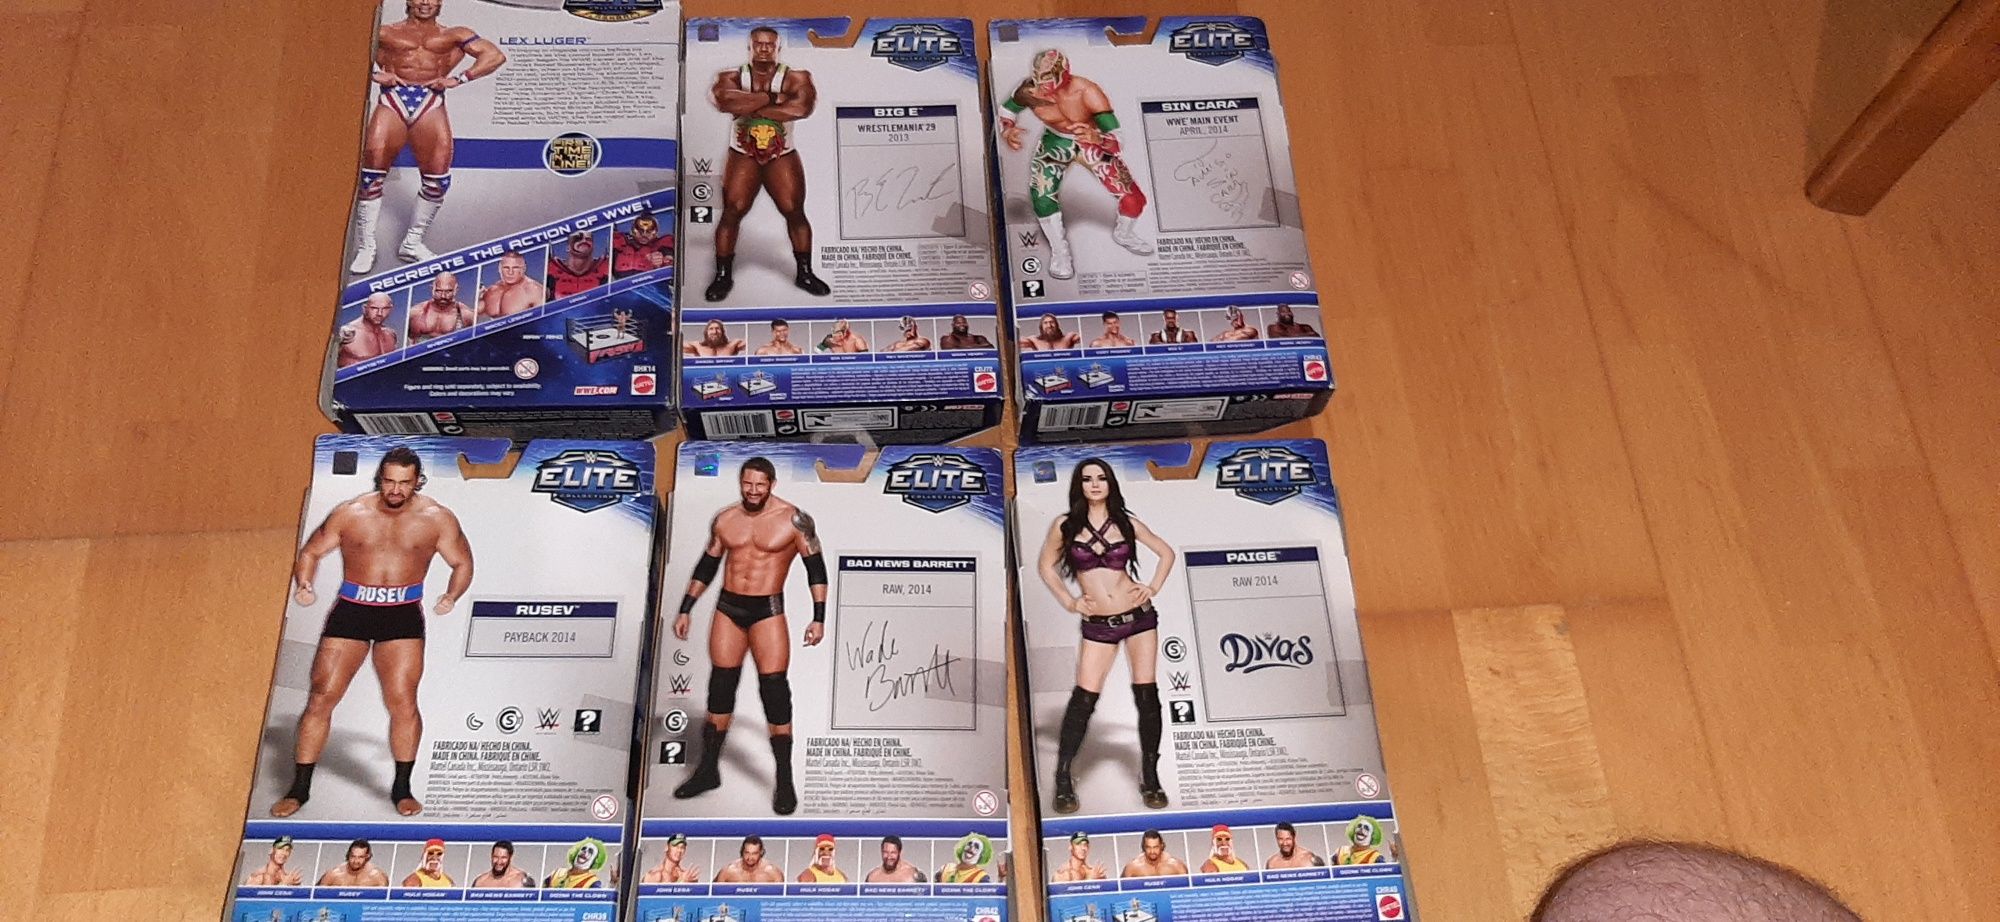 6 figuras/bonecos-wwe wrestling elites seladas na caixa